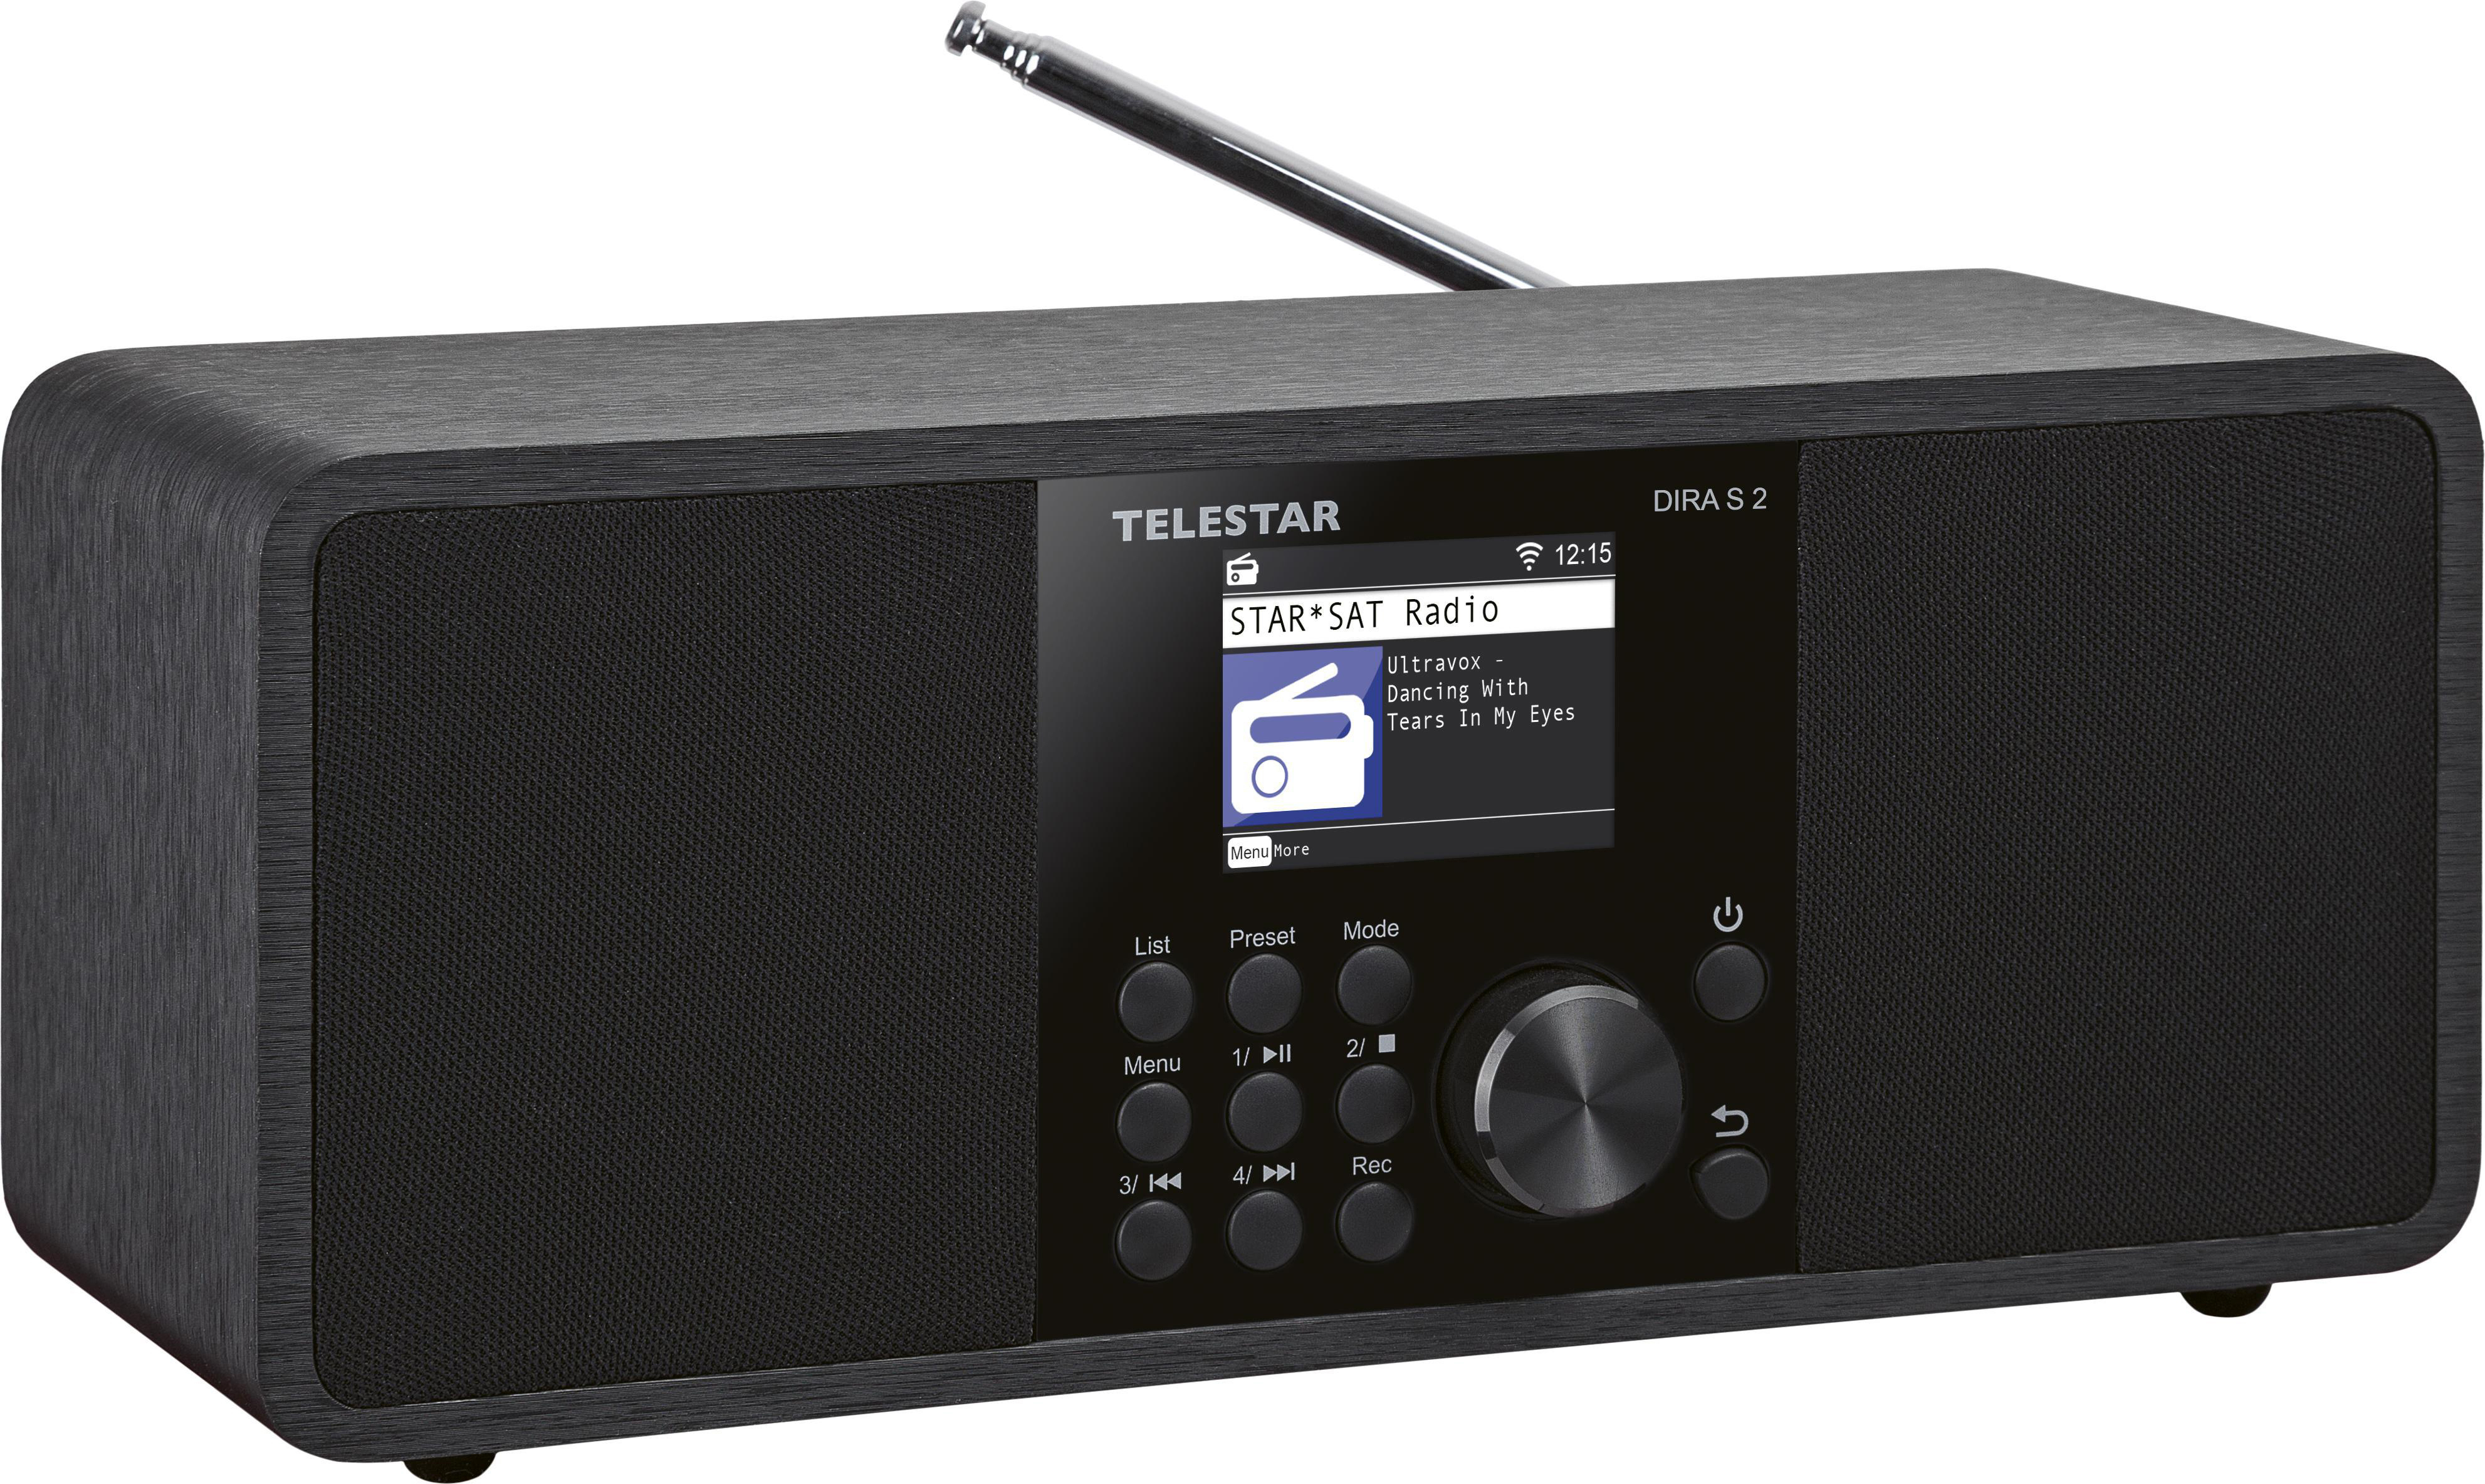 TELESTAR DIRA S 2 Internet Schwarz DAB+ Radio, DAB+, UKW, AM, DAB, DAB, Internet, FM, DAB+, Radio, Bluetooth